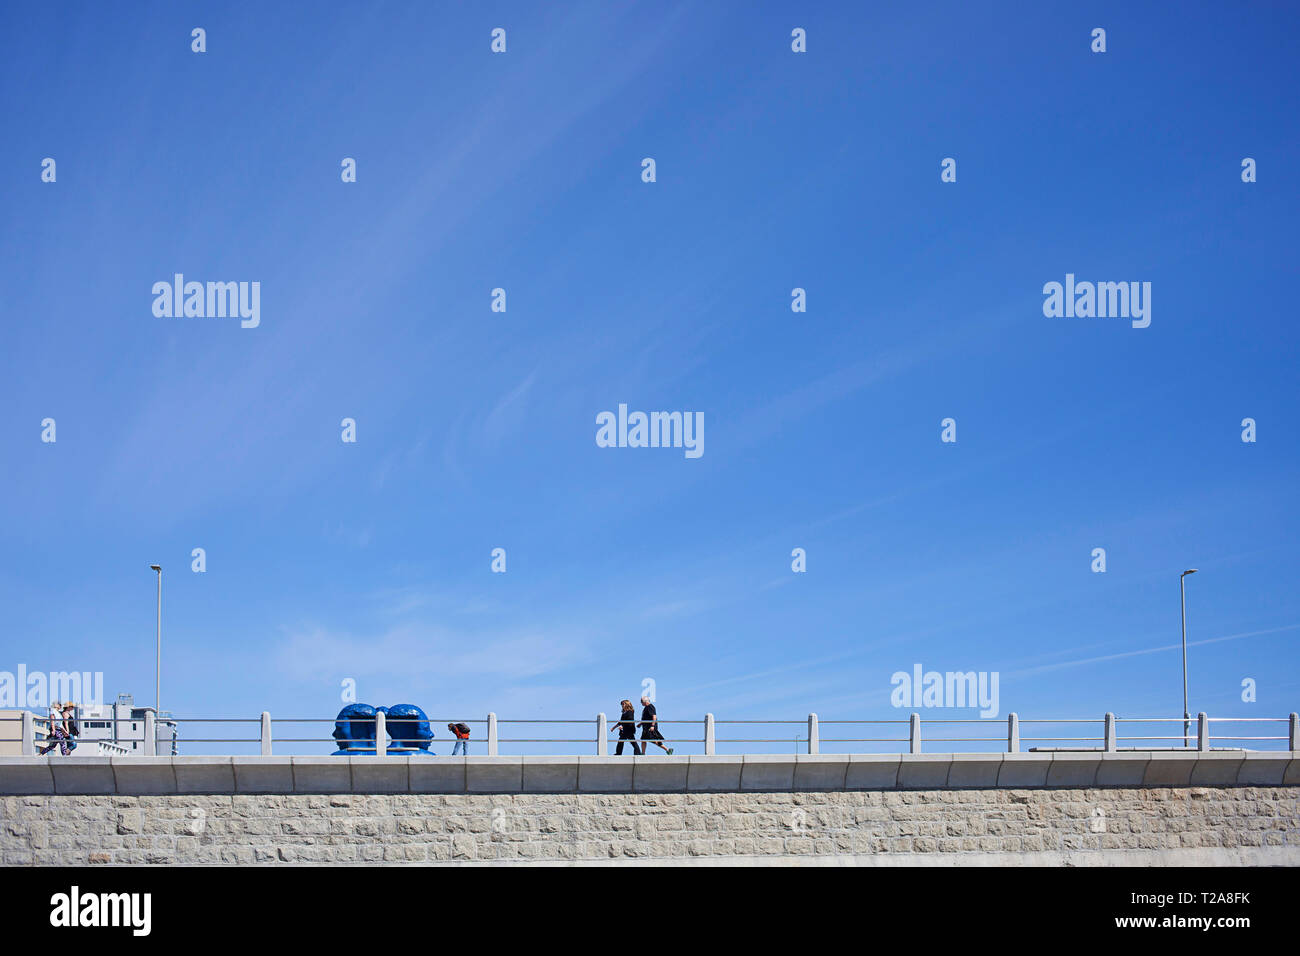 Minimalist view of couples walking along promenade Stock Photo